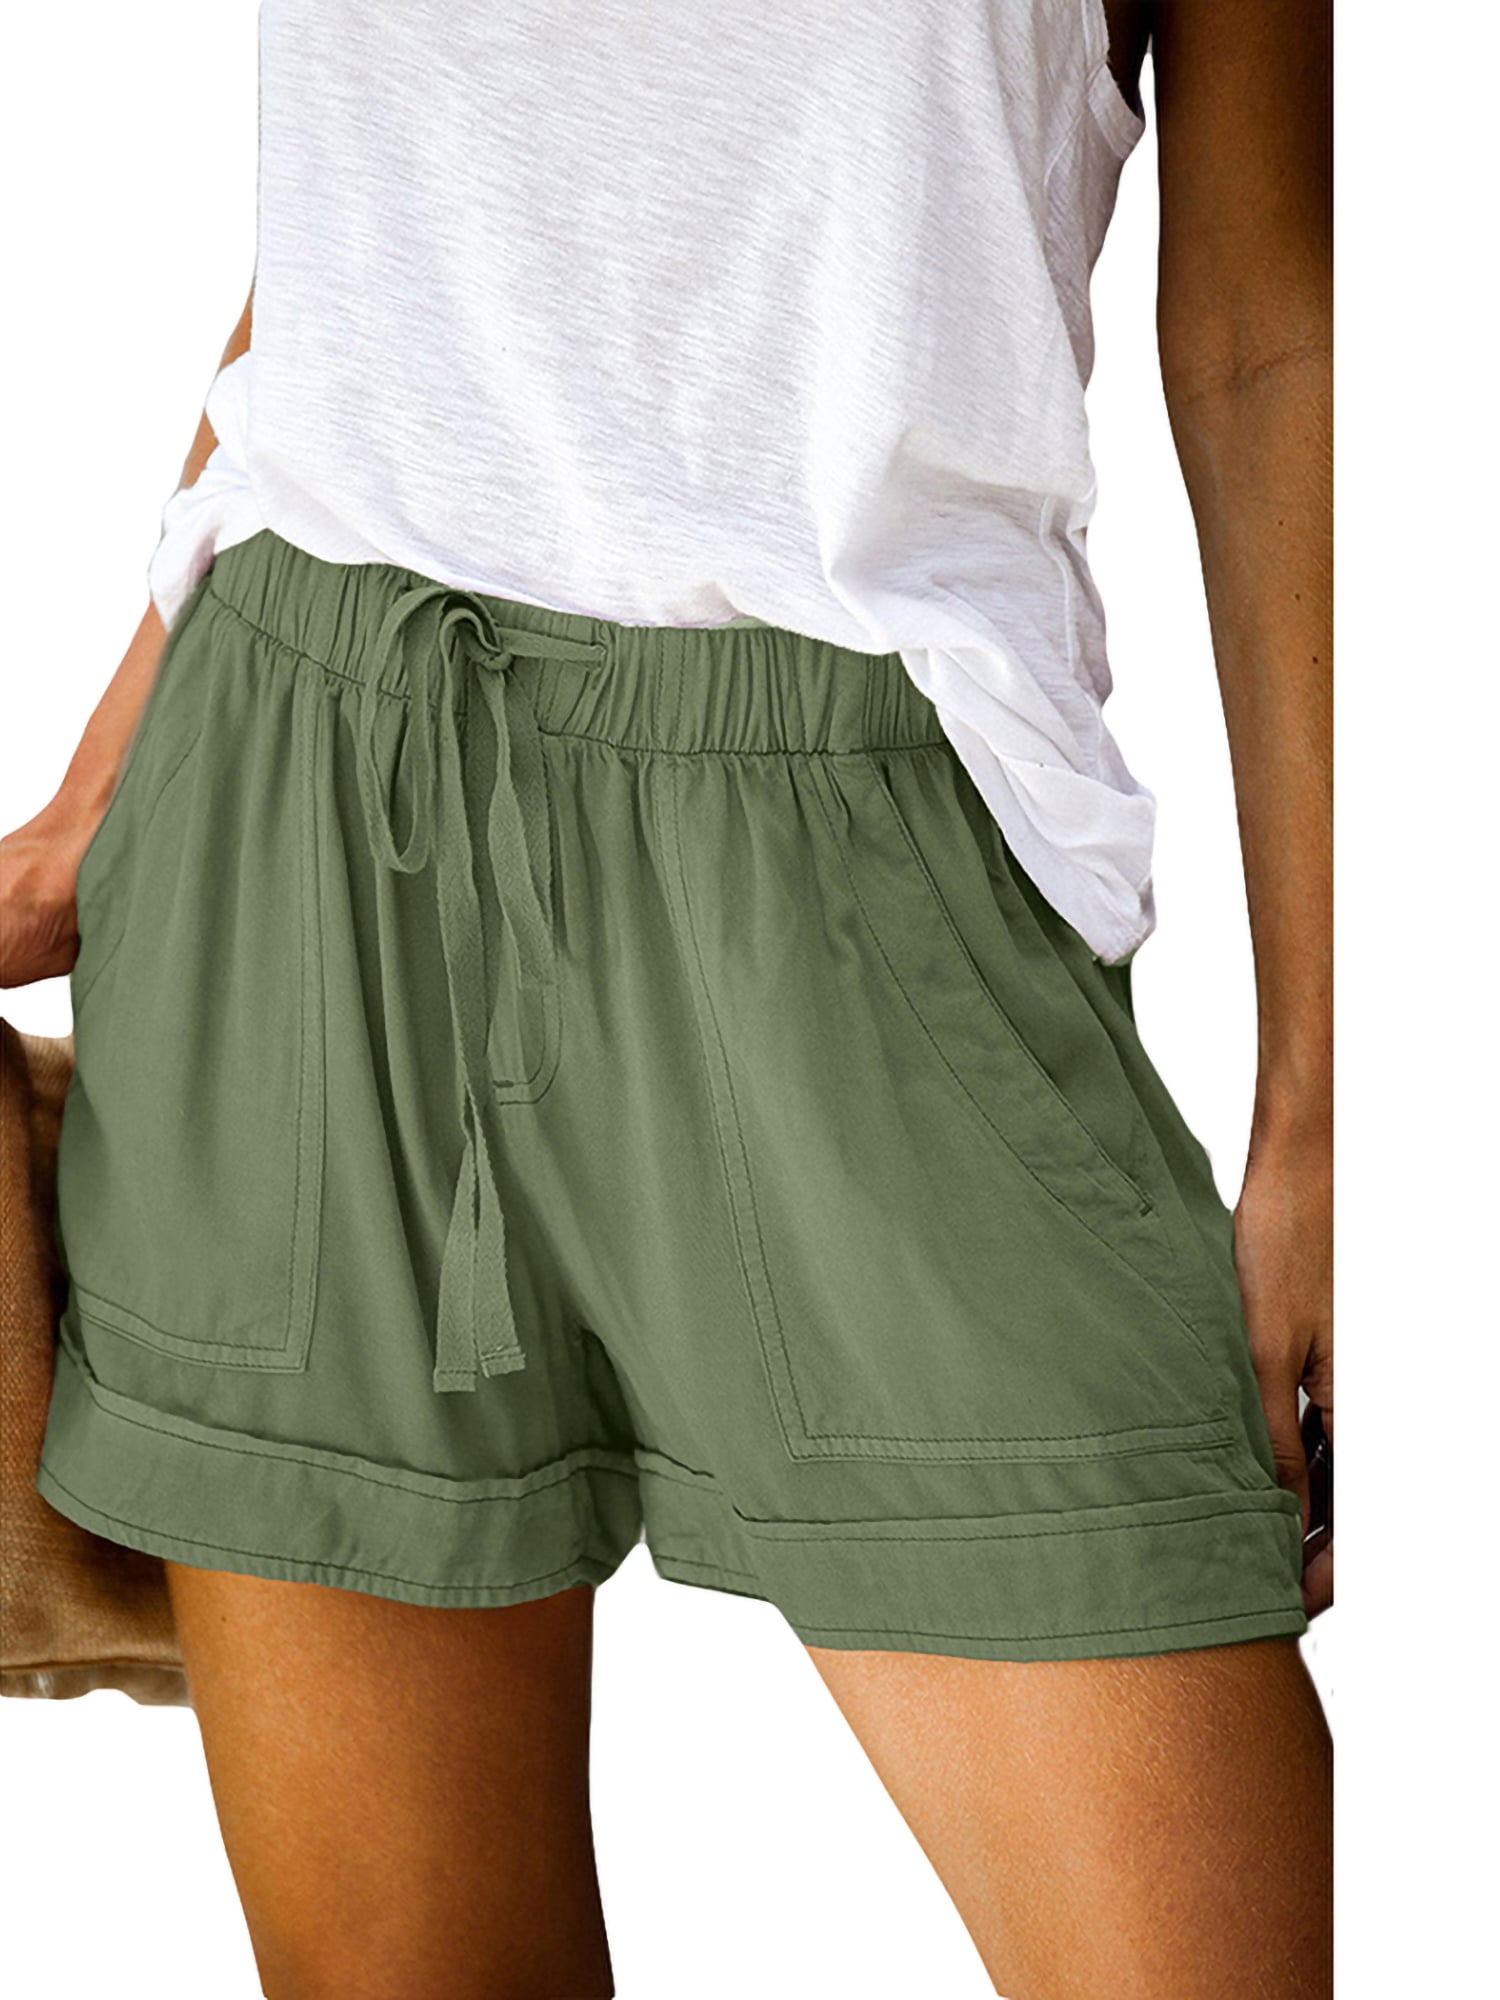 DOLDOA Summer Shorts for Women,Women's Casual High Waist Belted Beach Shorts Plus Size